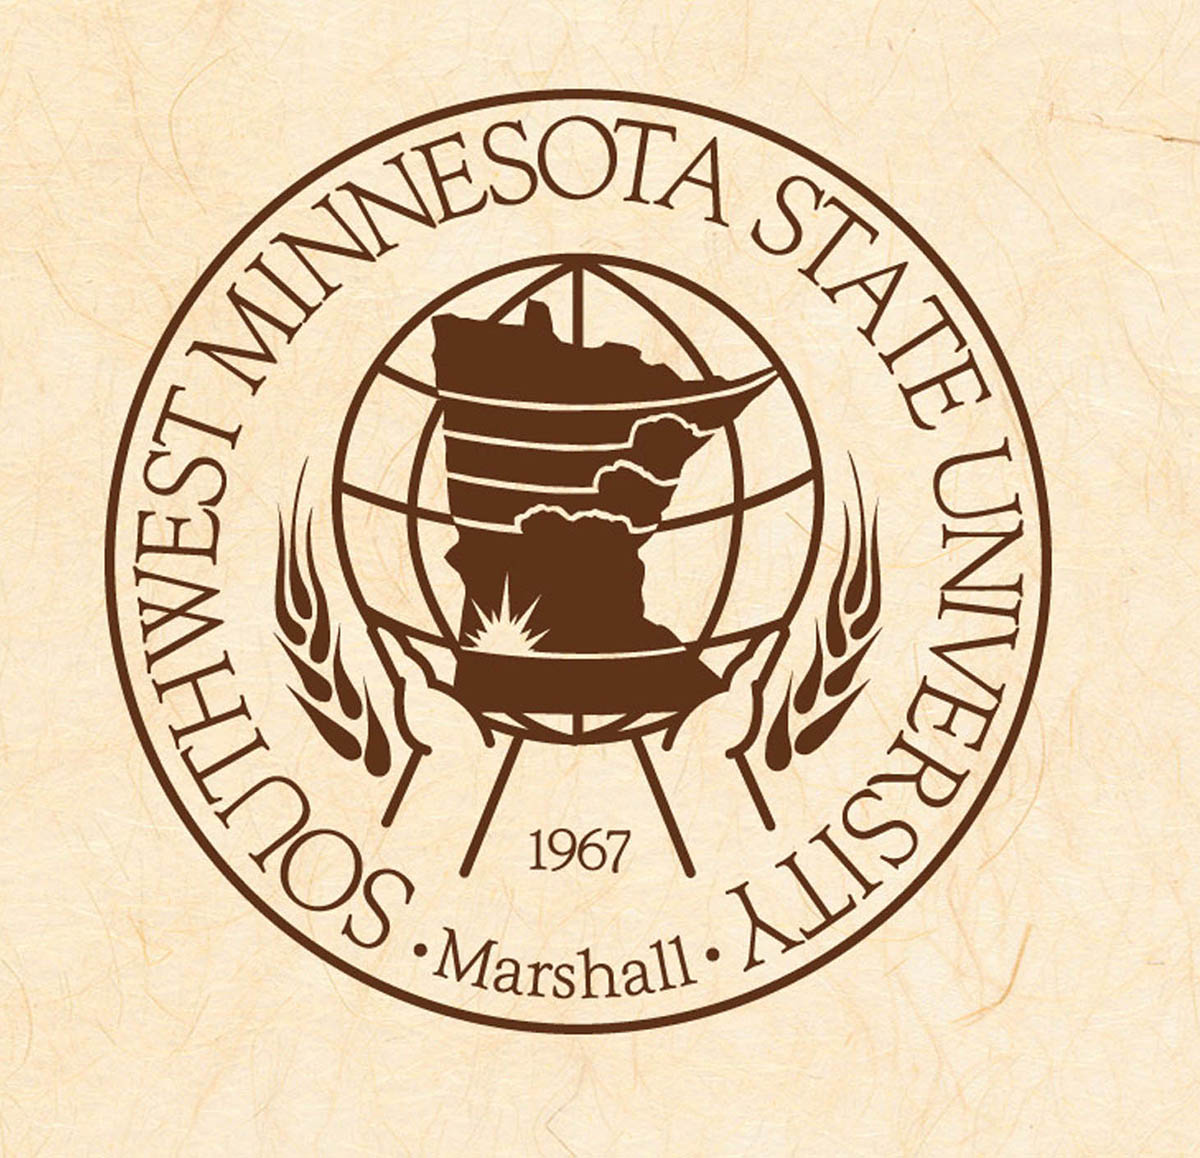 Southwest Minnesota State University Seal